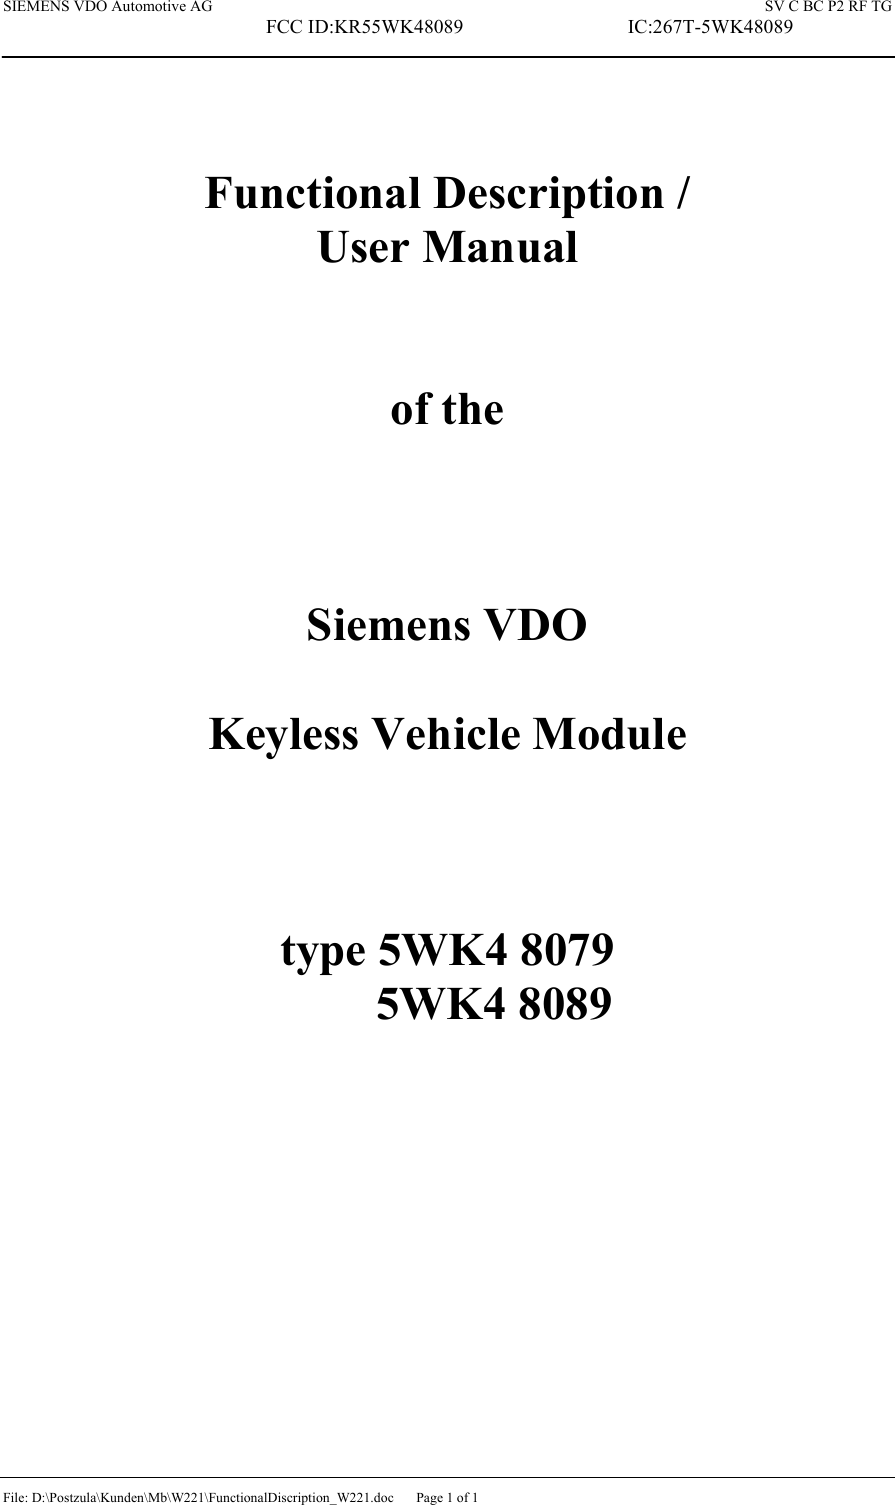 SIEMENS VDO Automotive AG    SV C BC P2 RF TG FCC ID:KR55WK48089  IC:267T-5WK48089 File: D:\Postzula\Kunden\Mb\W221\FunctionalDiscription_W221.doc  Page 1 of 1   Functional Description / User Manual   of the    Siemens VDO  Keyless Vehicle Module    type 5WK4 8079          5WK4 8089 